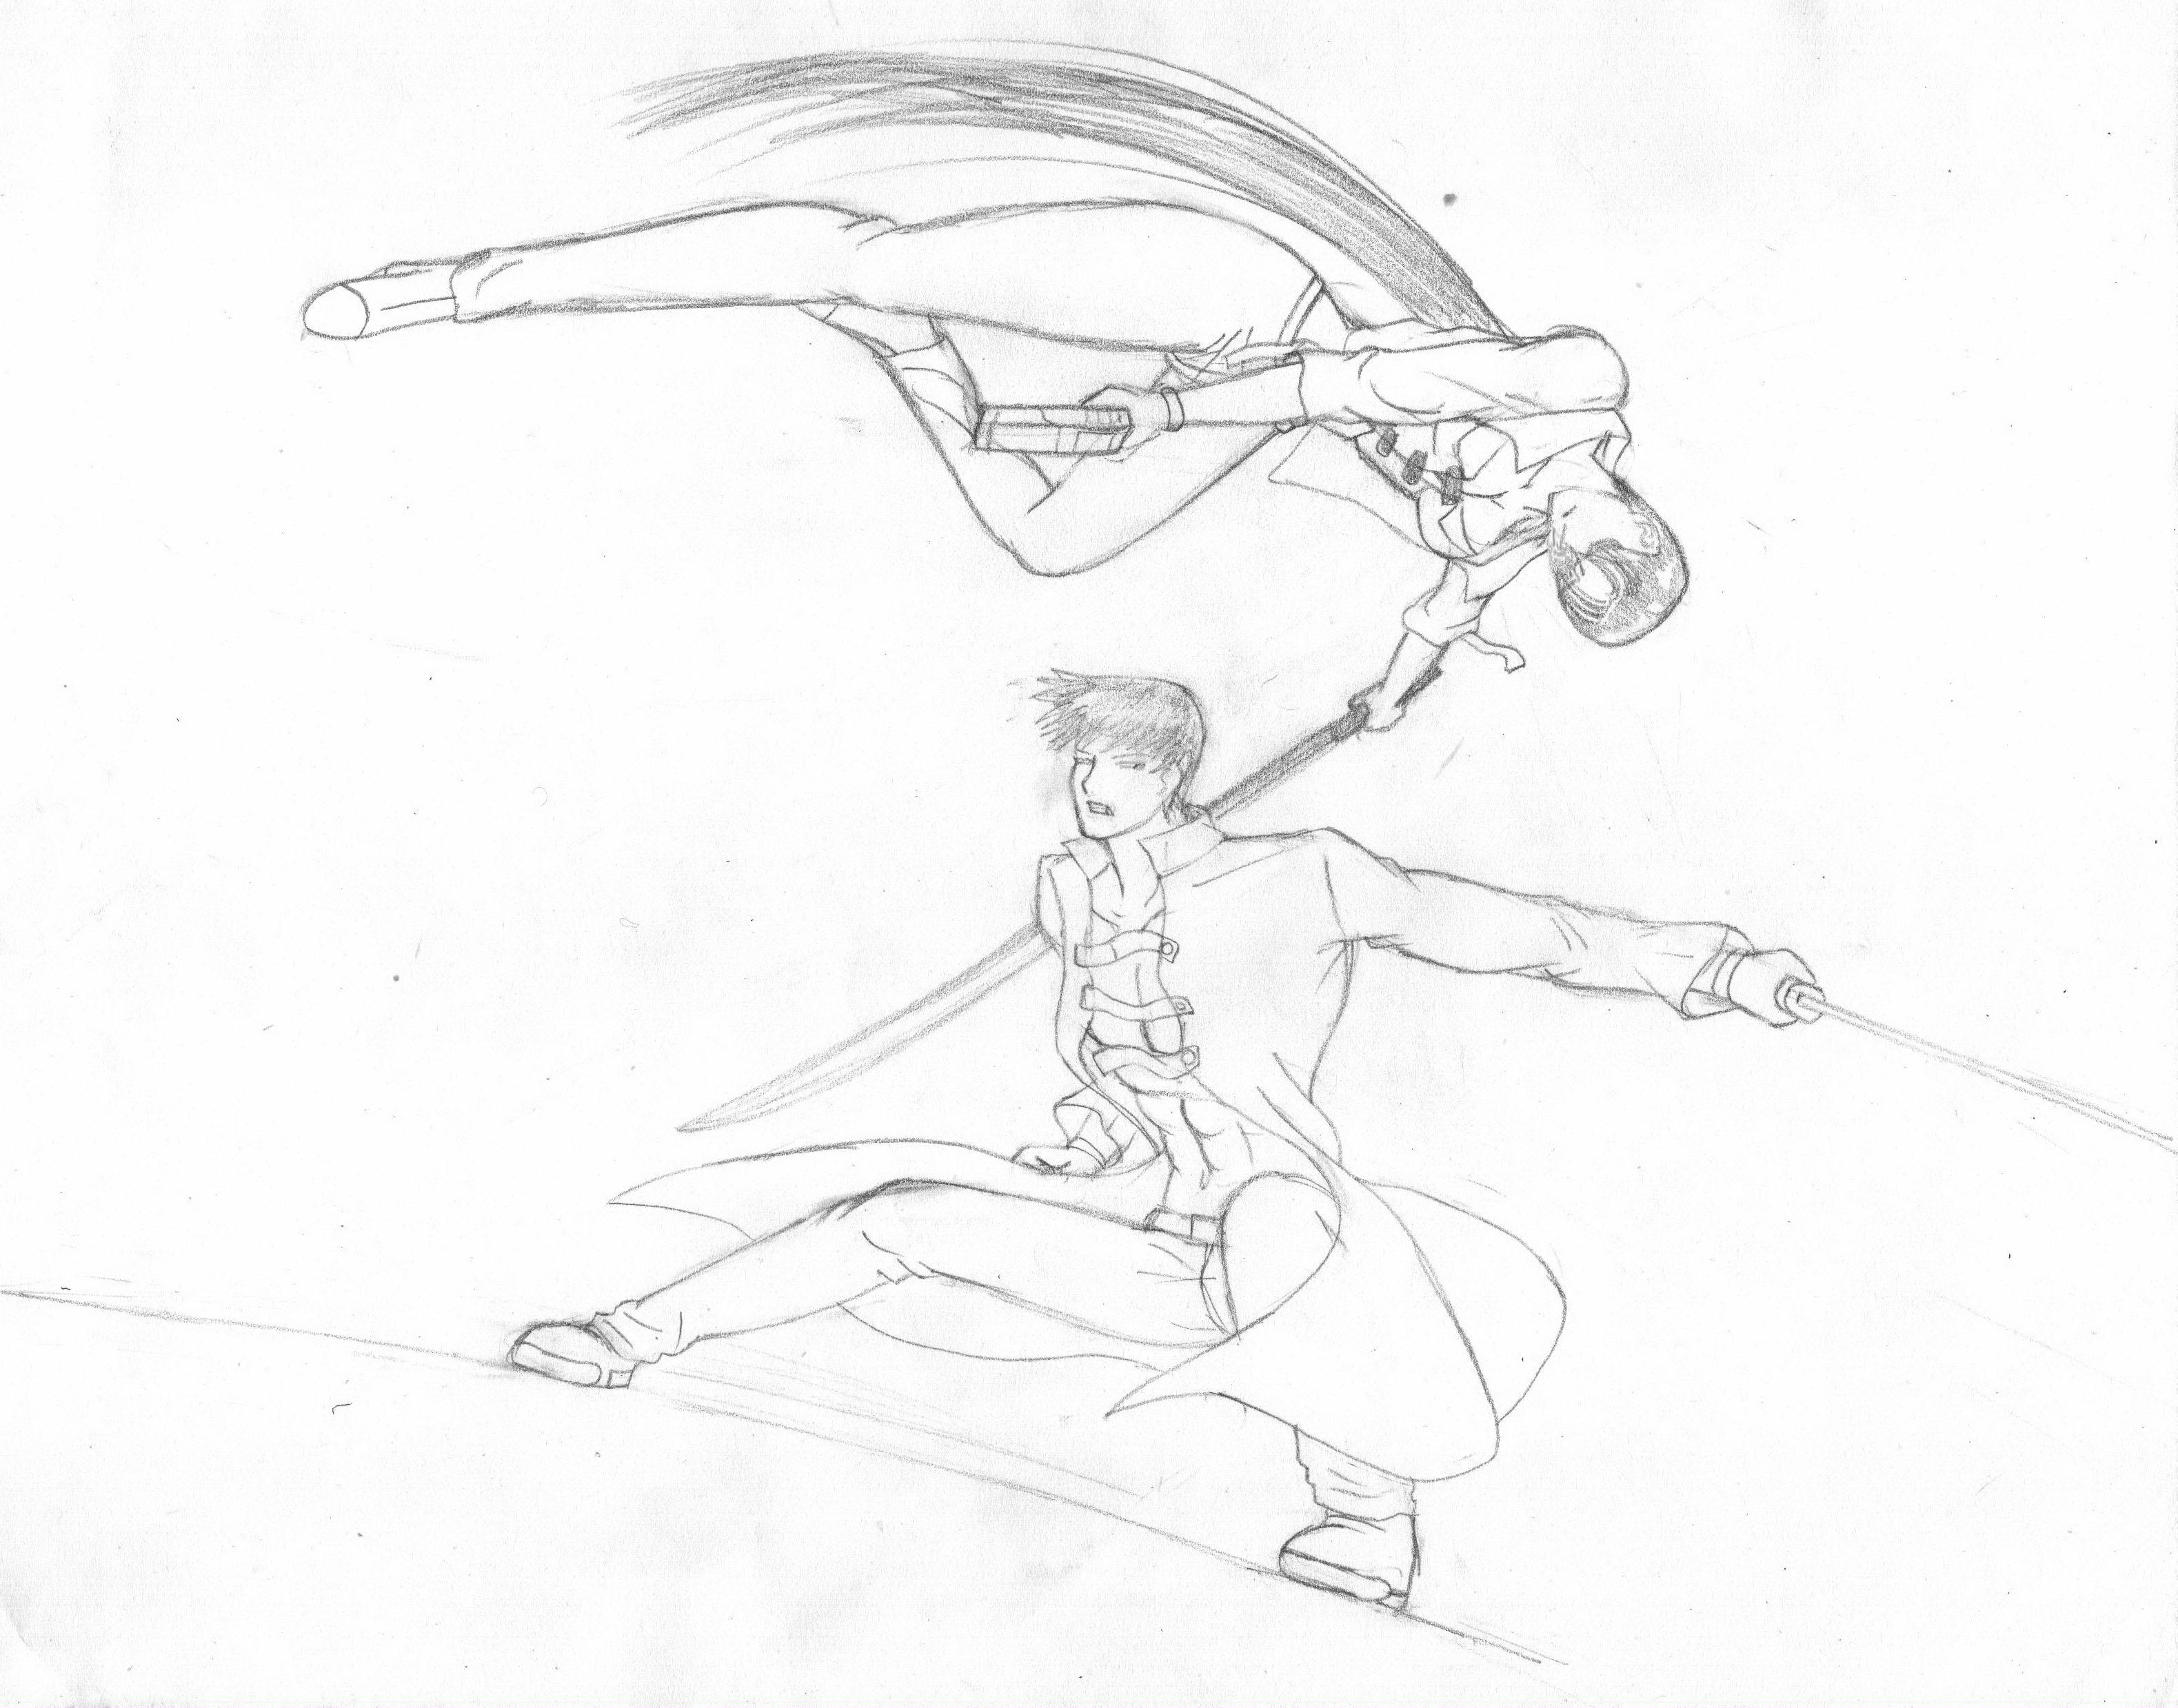 Fight Sketch by Shin--chan on DeviantArt